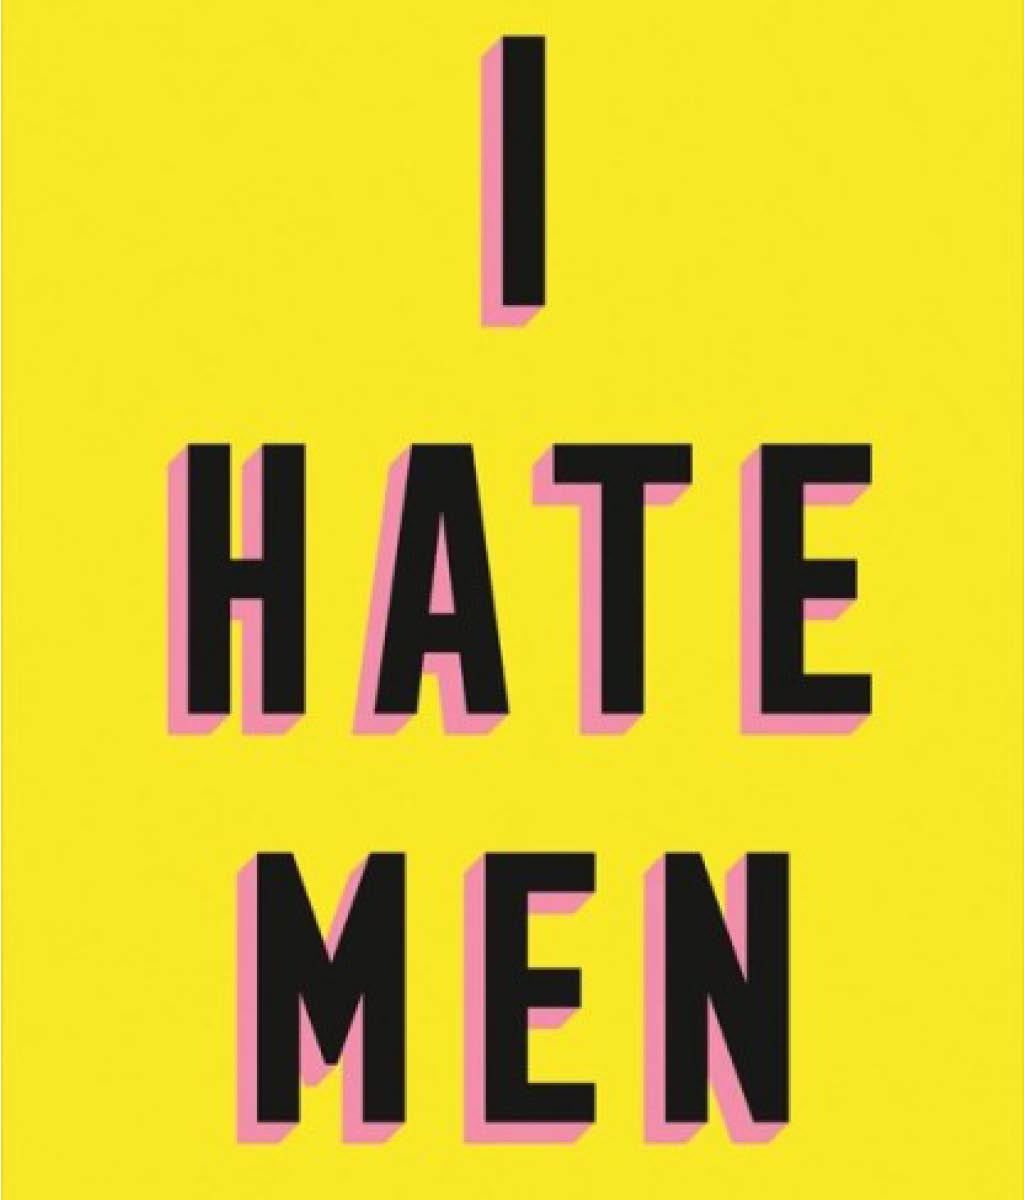 I Hate Men by Pauline Harmange